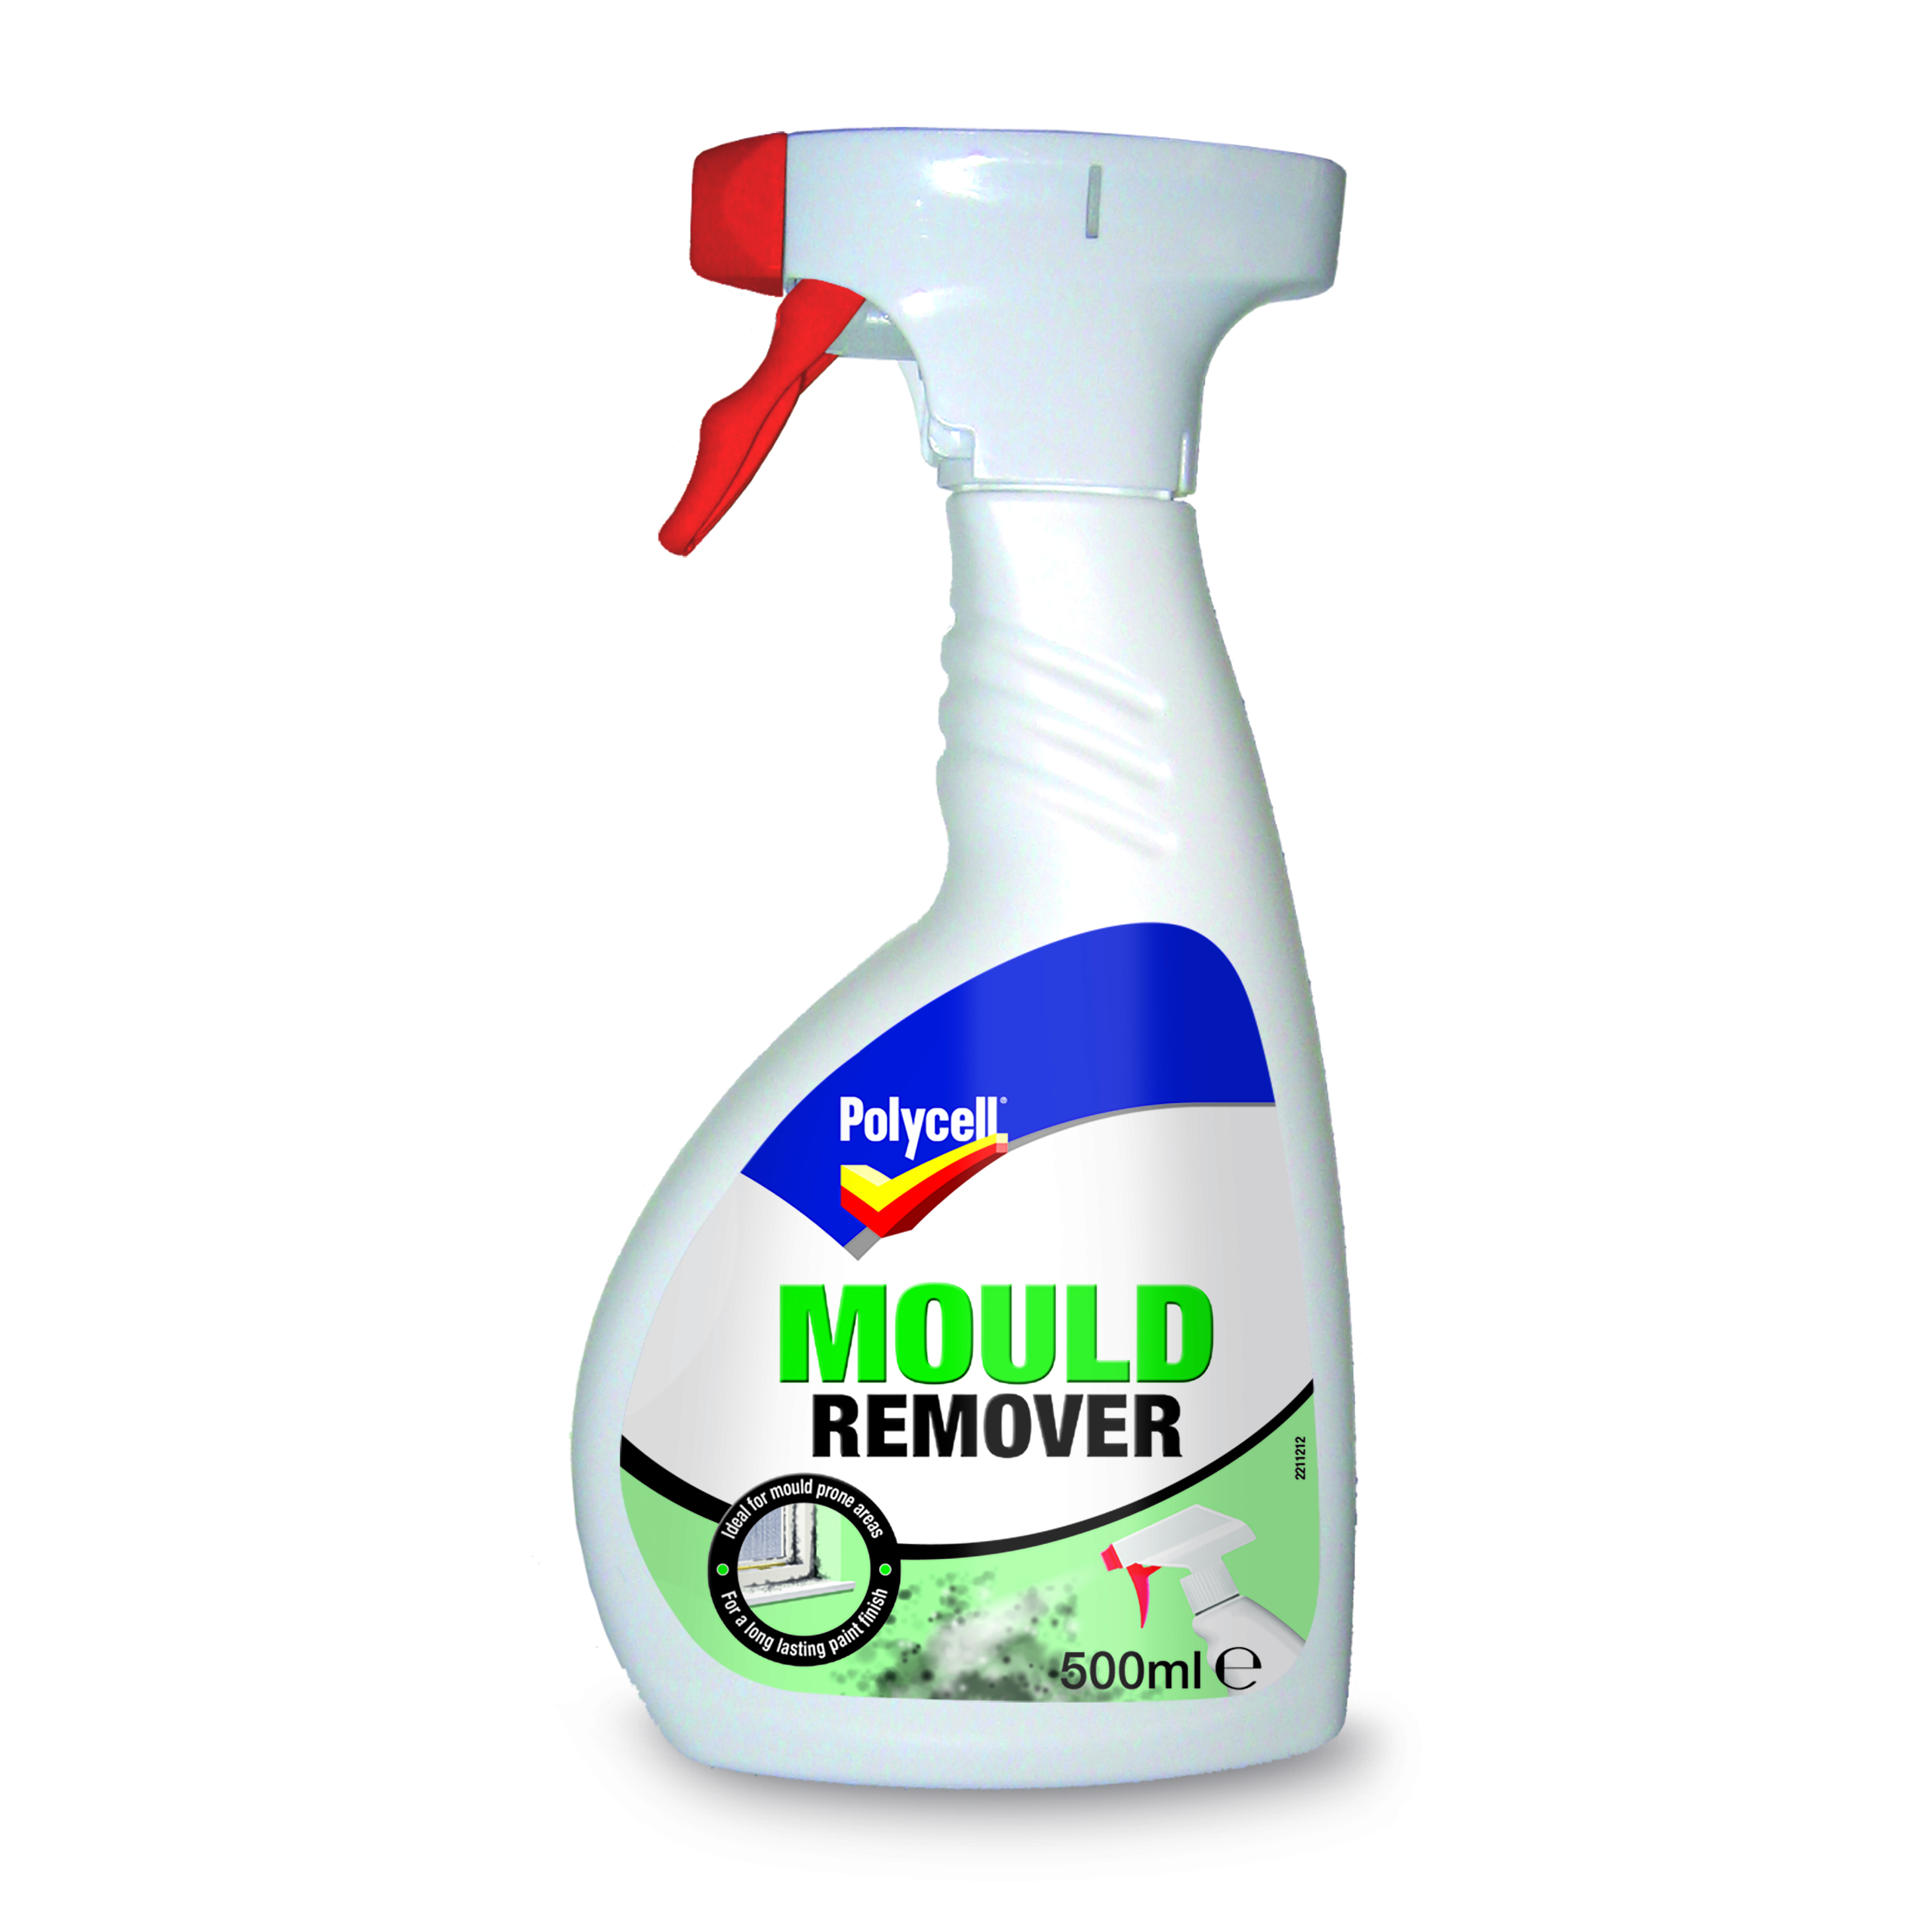 Buy Mould Remover online